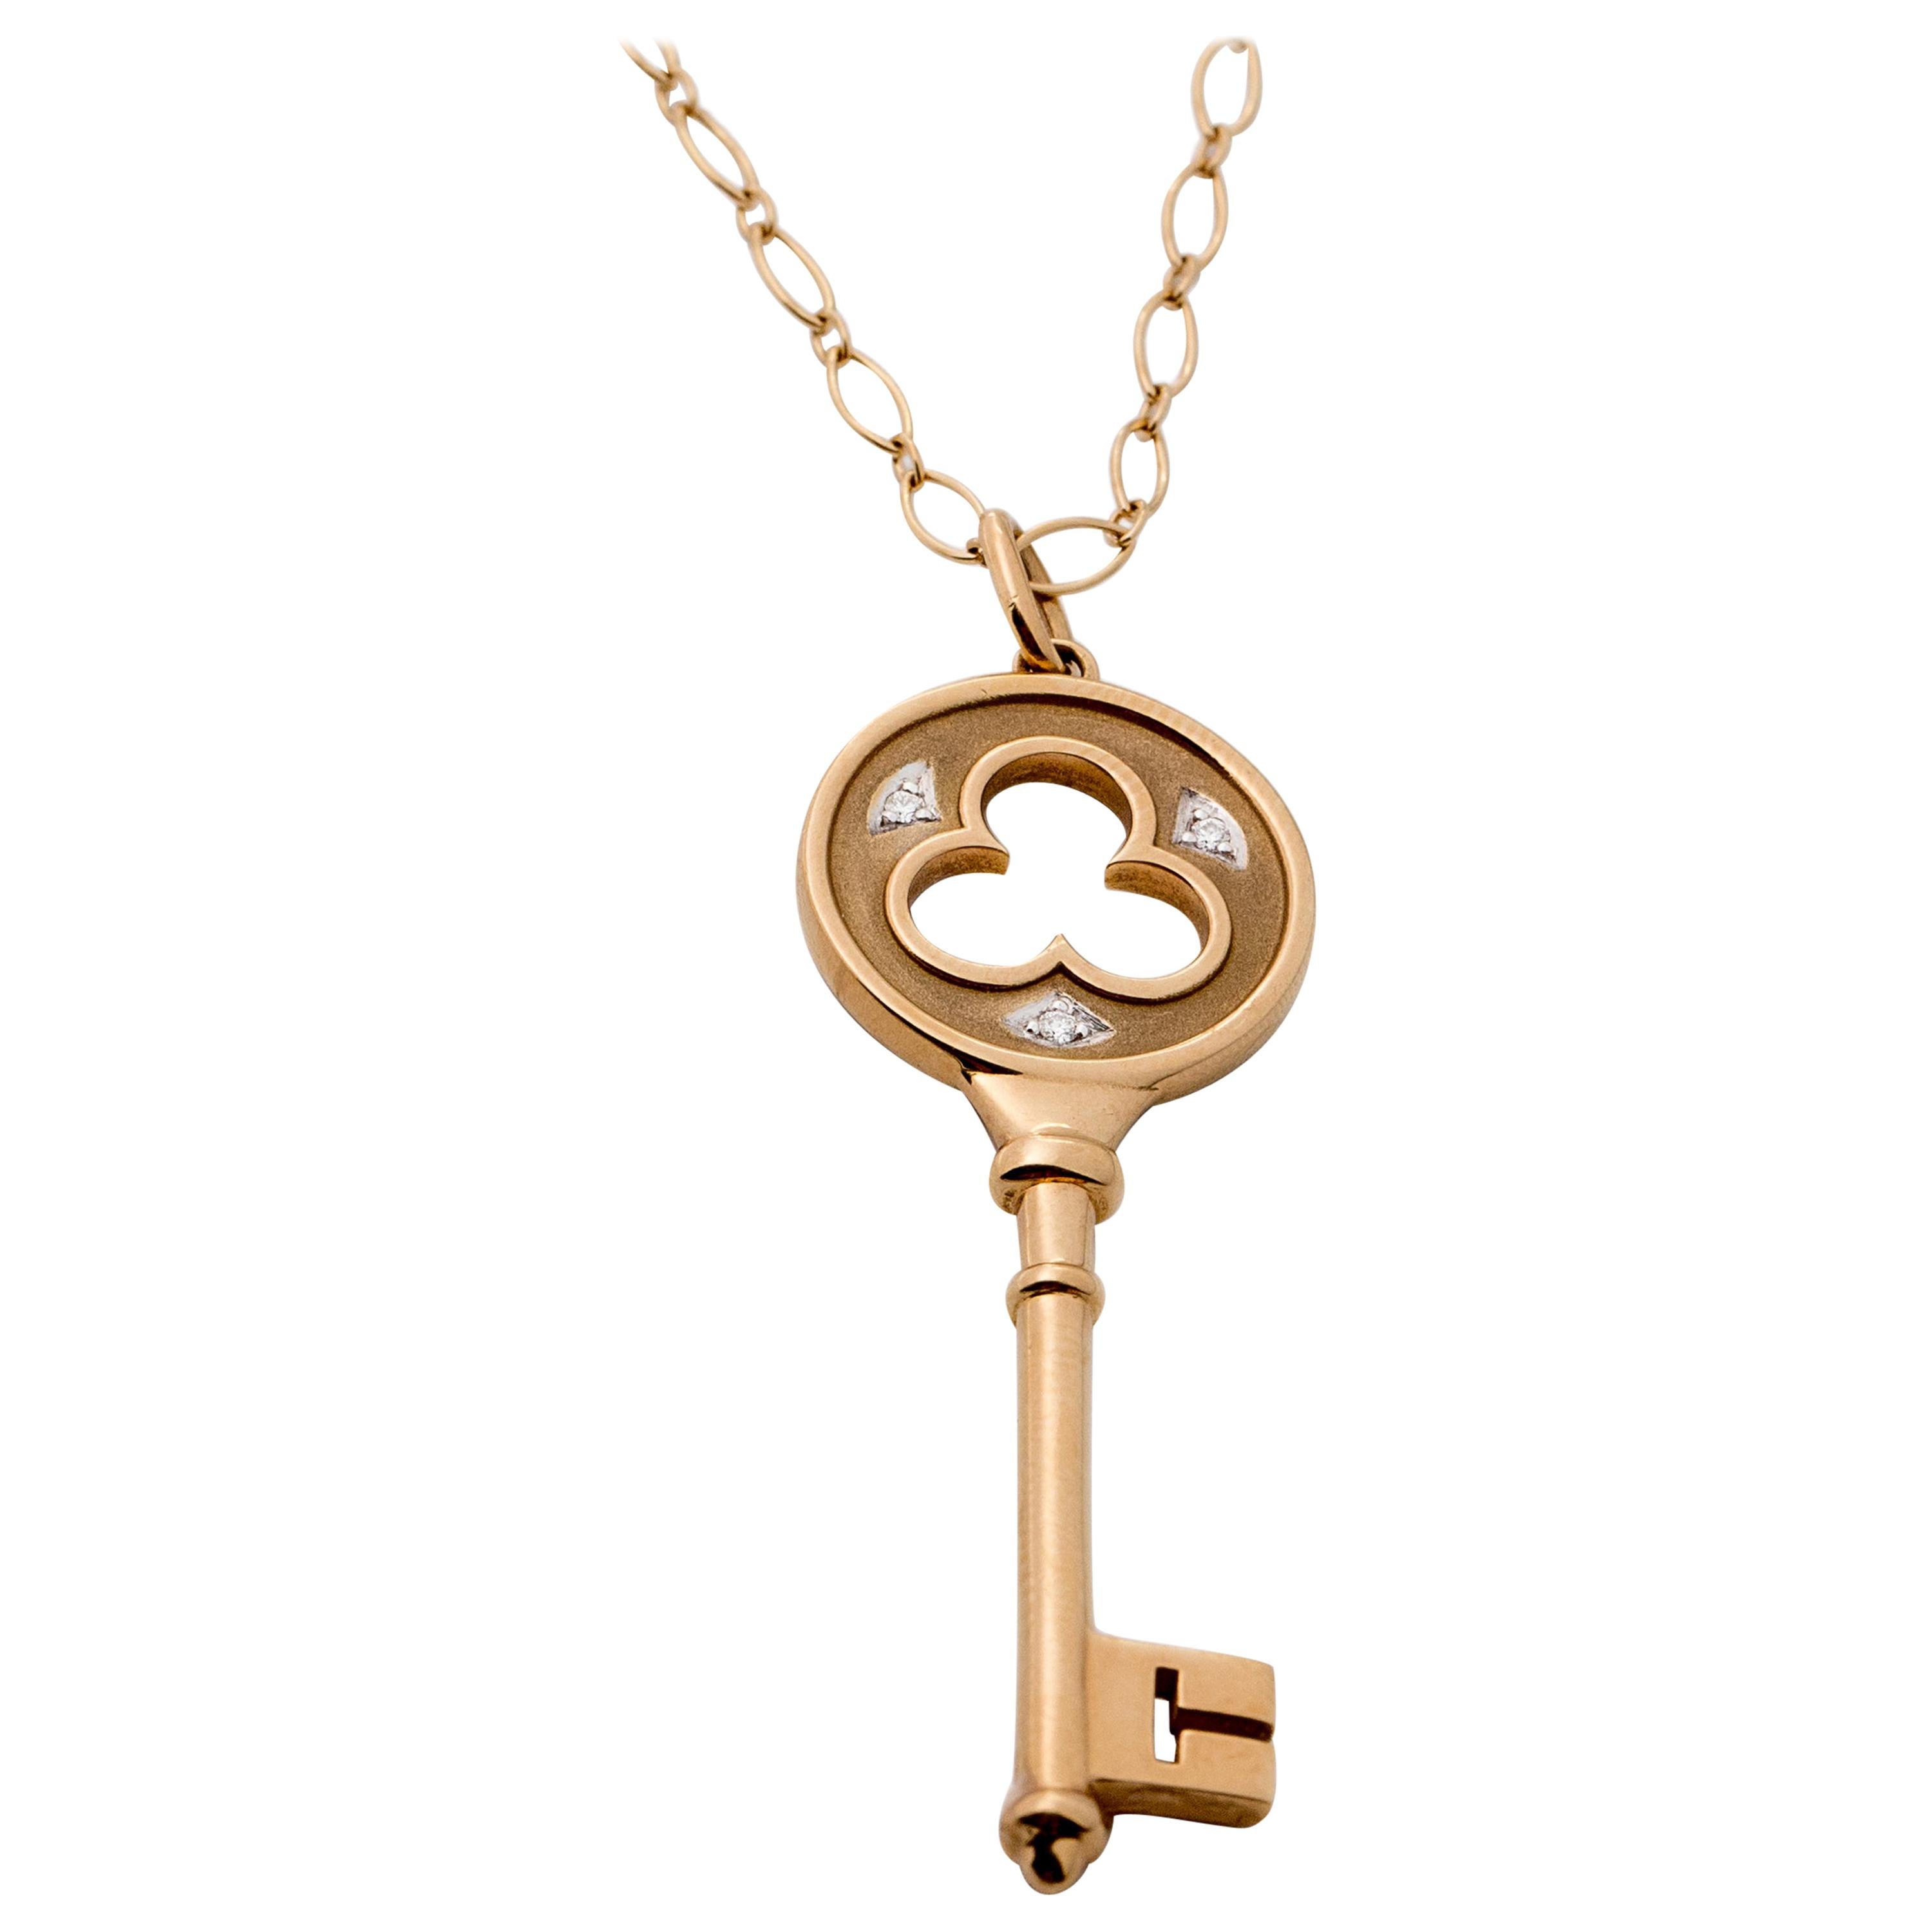 Tiffany & Co. Key Chain Necklace, 18 Karat Gold